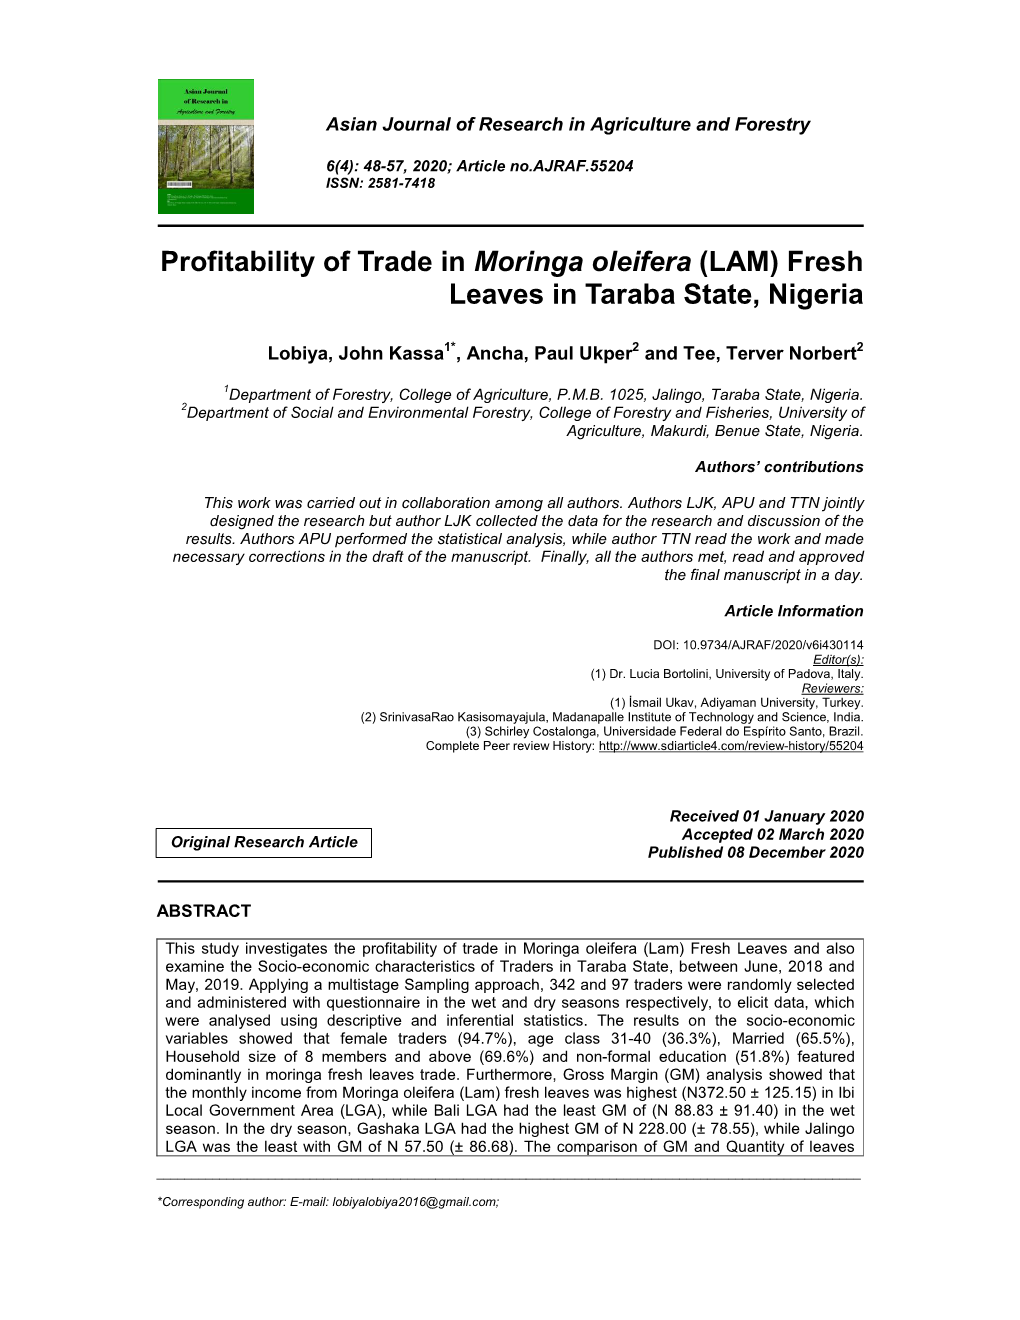 Profitability of Trade in Moringa Oleifera (LAM) Fresh Leaves in Taraba State, Nigeria